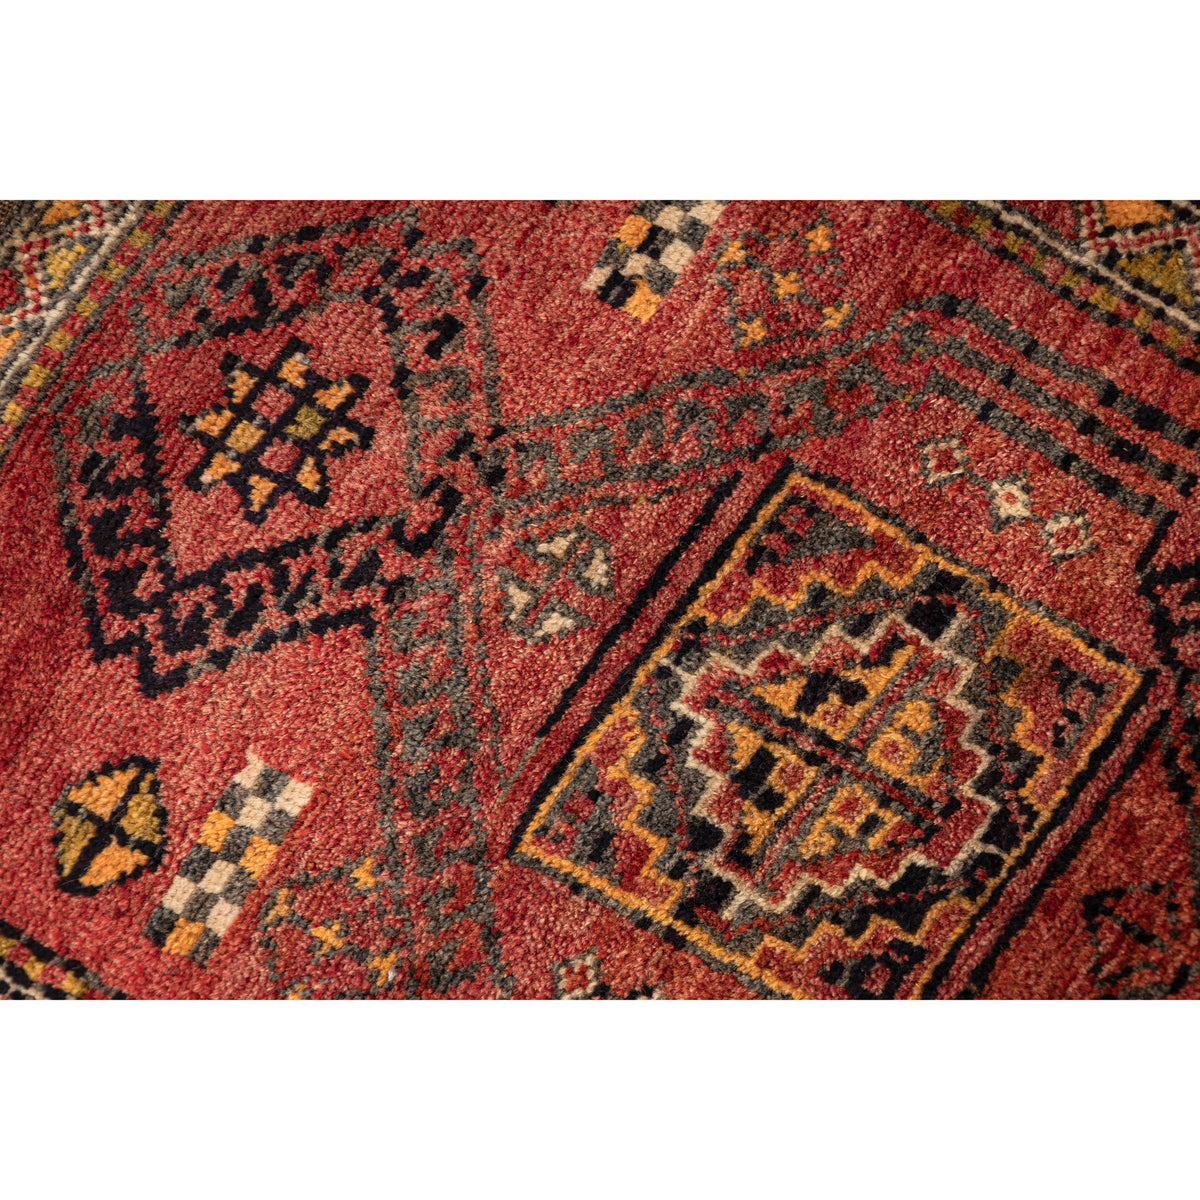 Erdened - (1'10" x 2'8") Vintage Turkish Rug